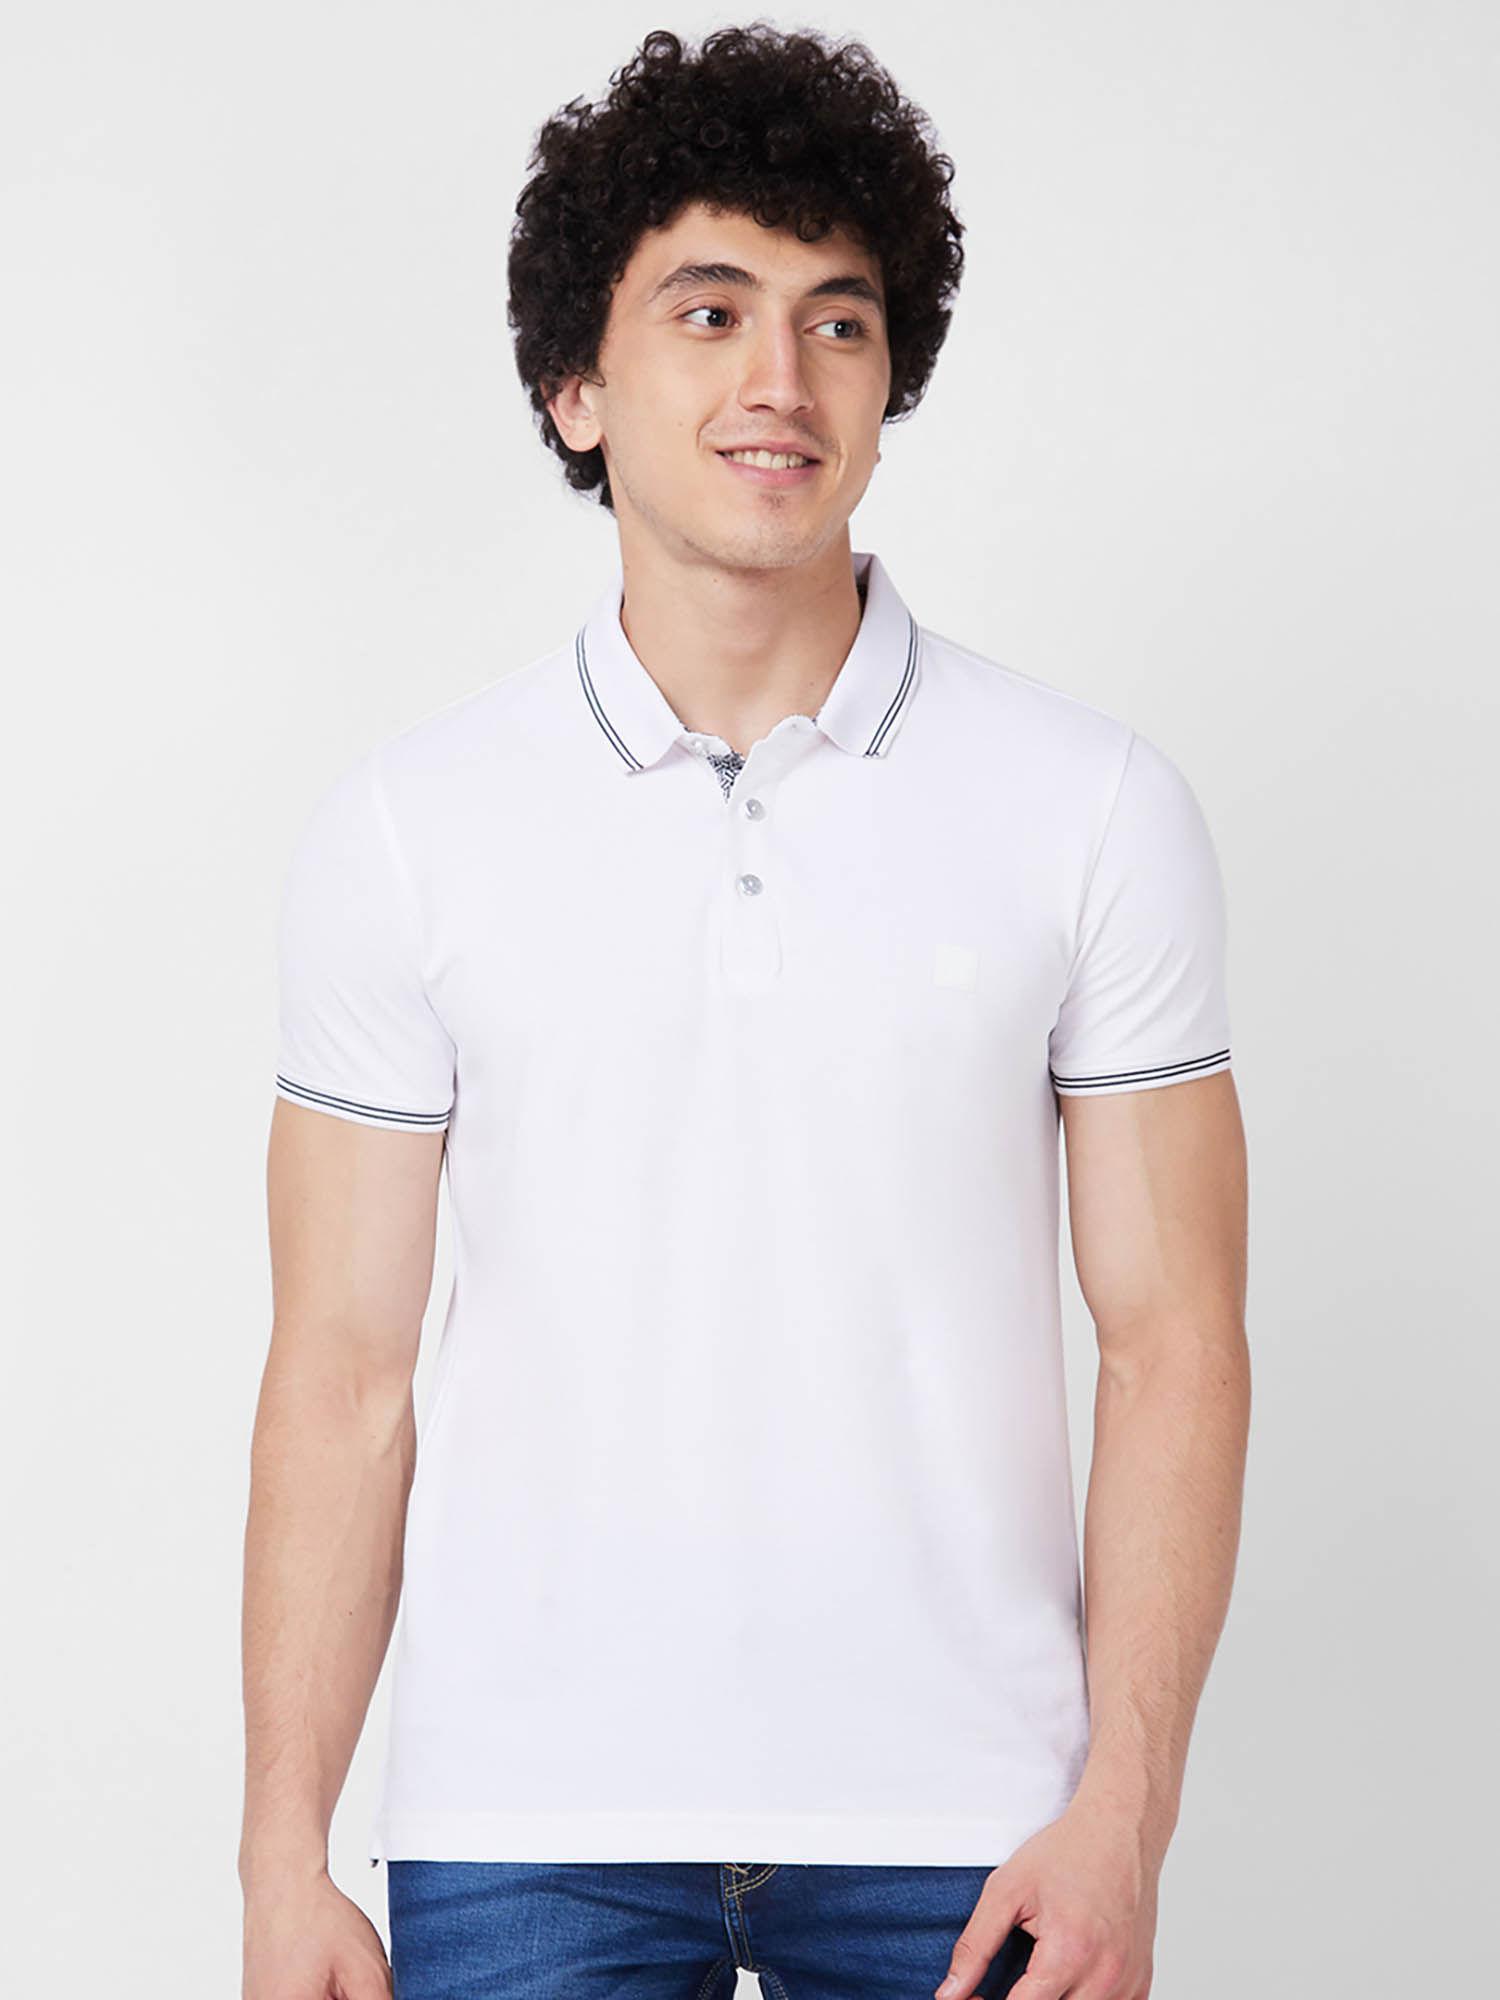 slim-fit-white-polo-t-shirt-for-men